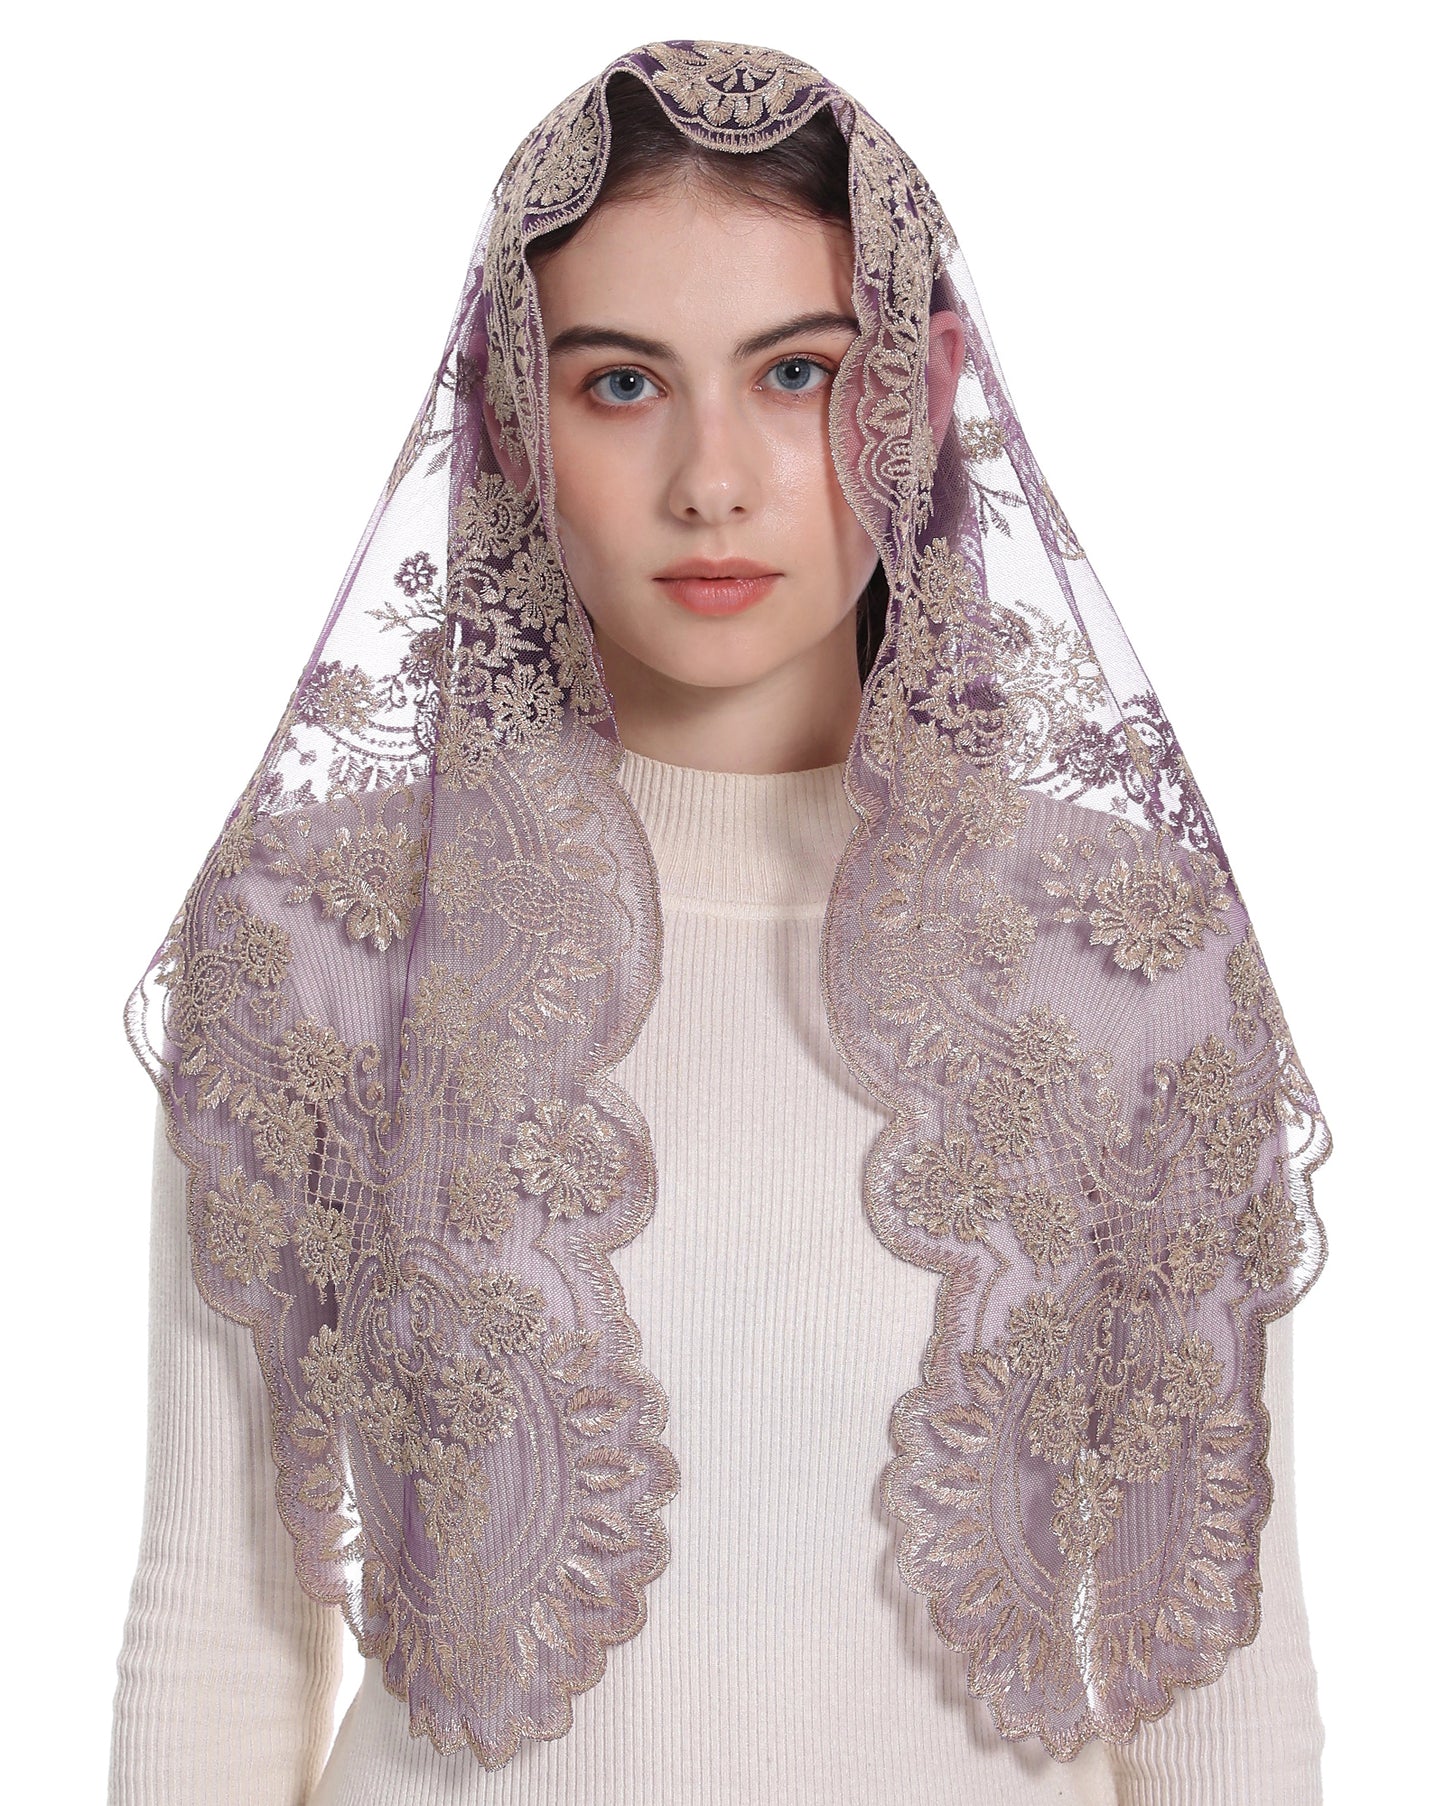 Bozidol Spanish Style Catholic Mass Mantillas Veil for Prayer Floral Orthodox Head Coverings Shawl Chapel Veils